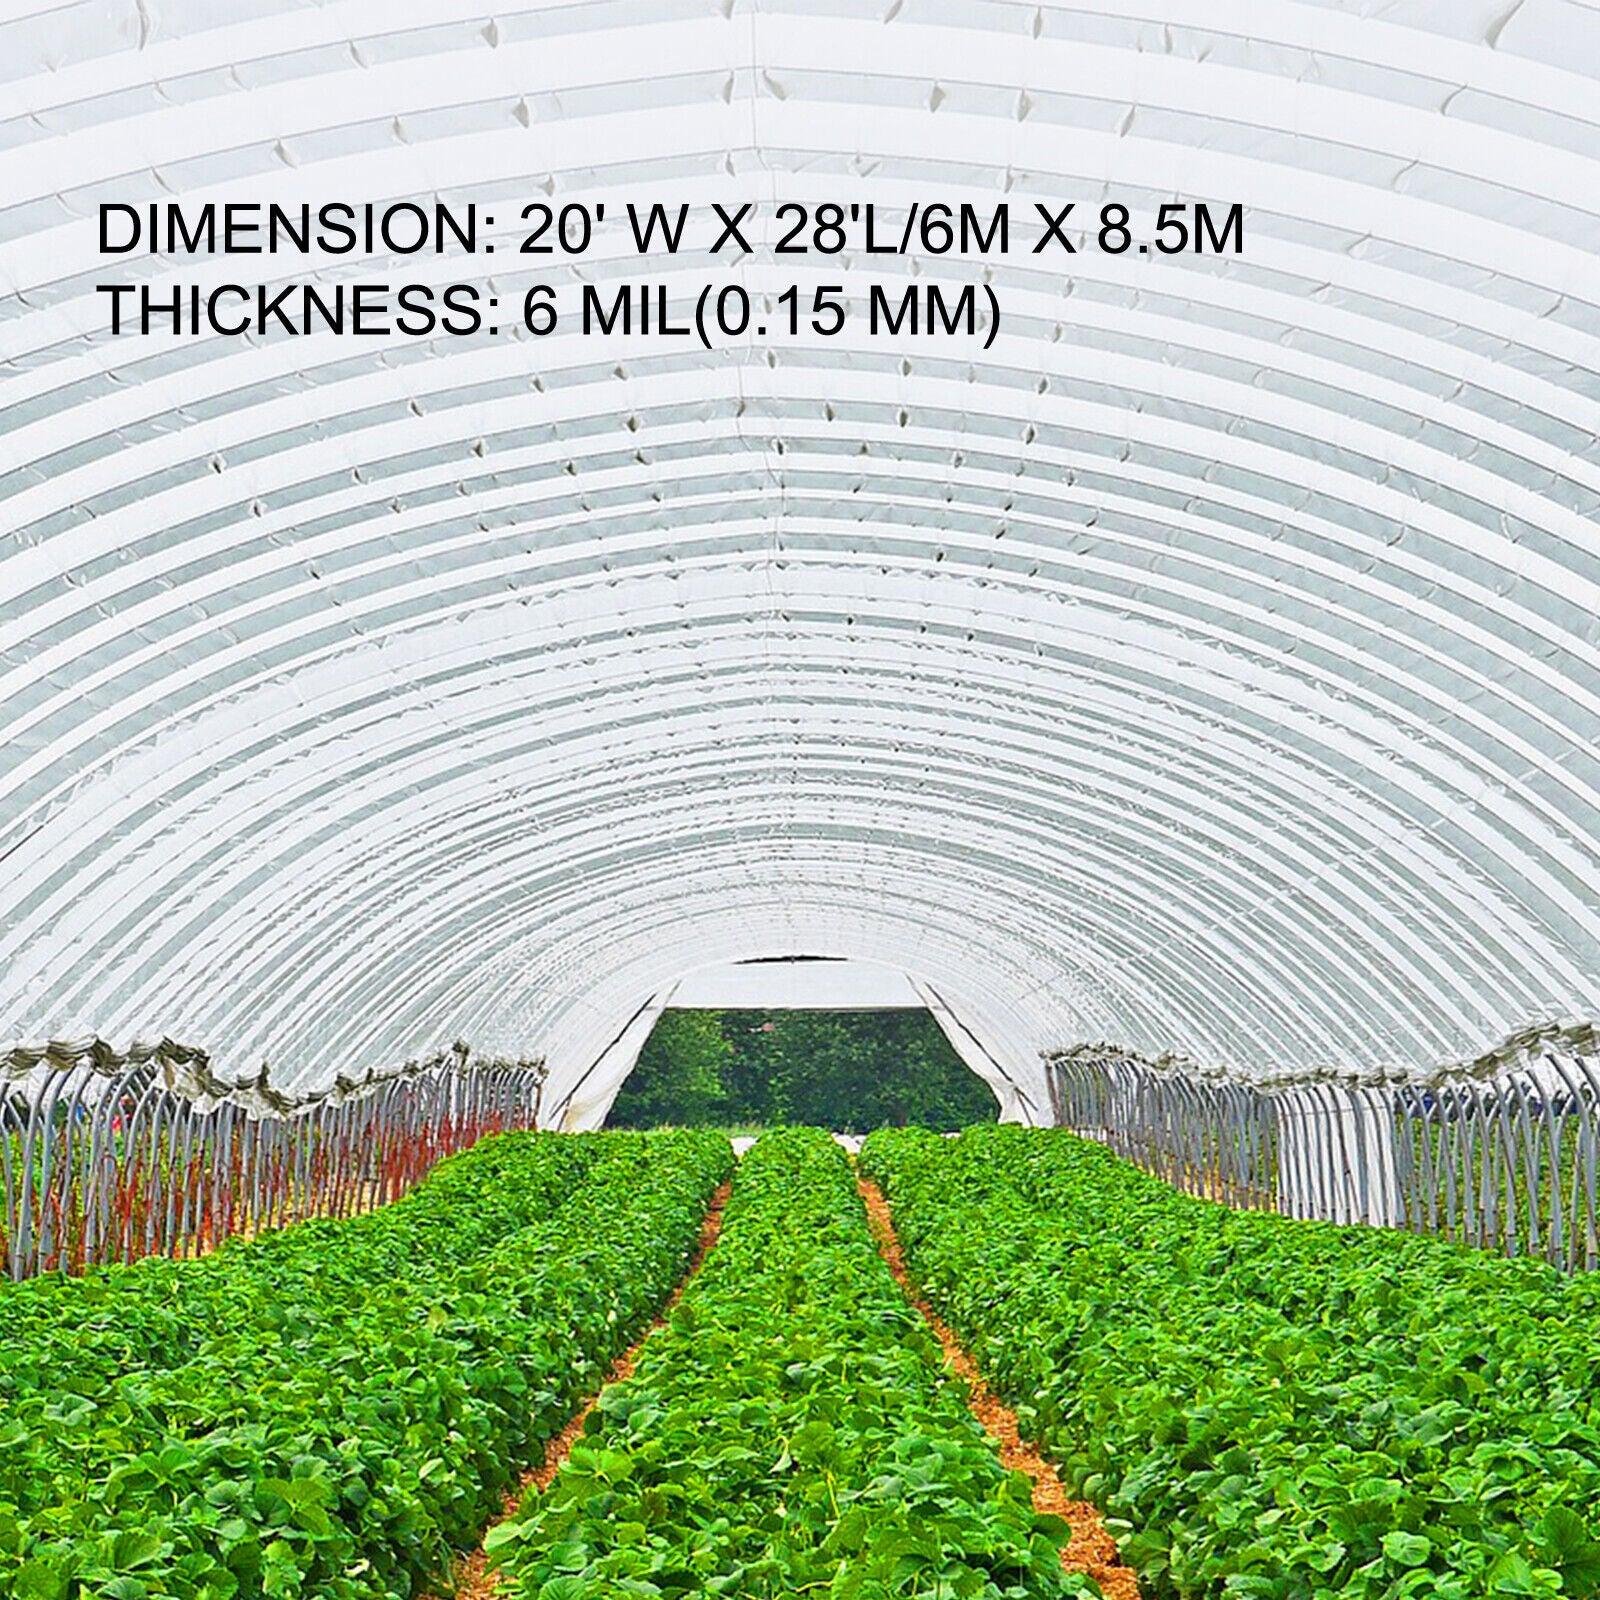 6m x 8.5m x 0.15mm Greenhouse Film Greenhouse Polyethylene Film Plastic Cover Garden